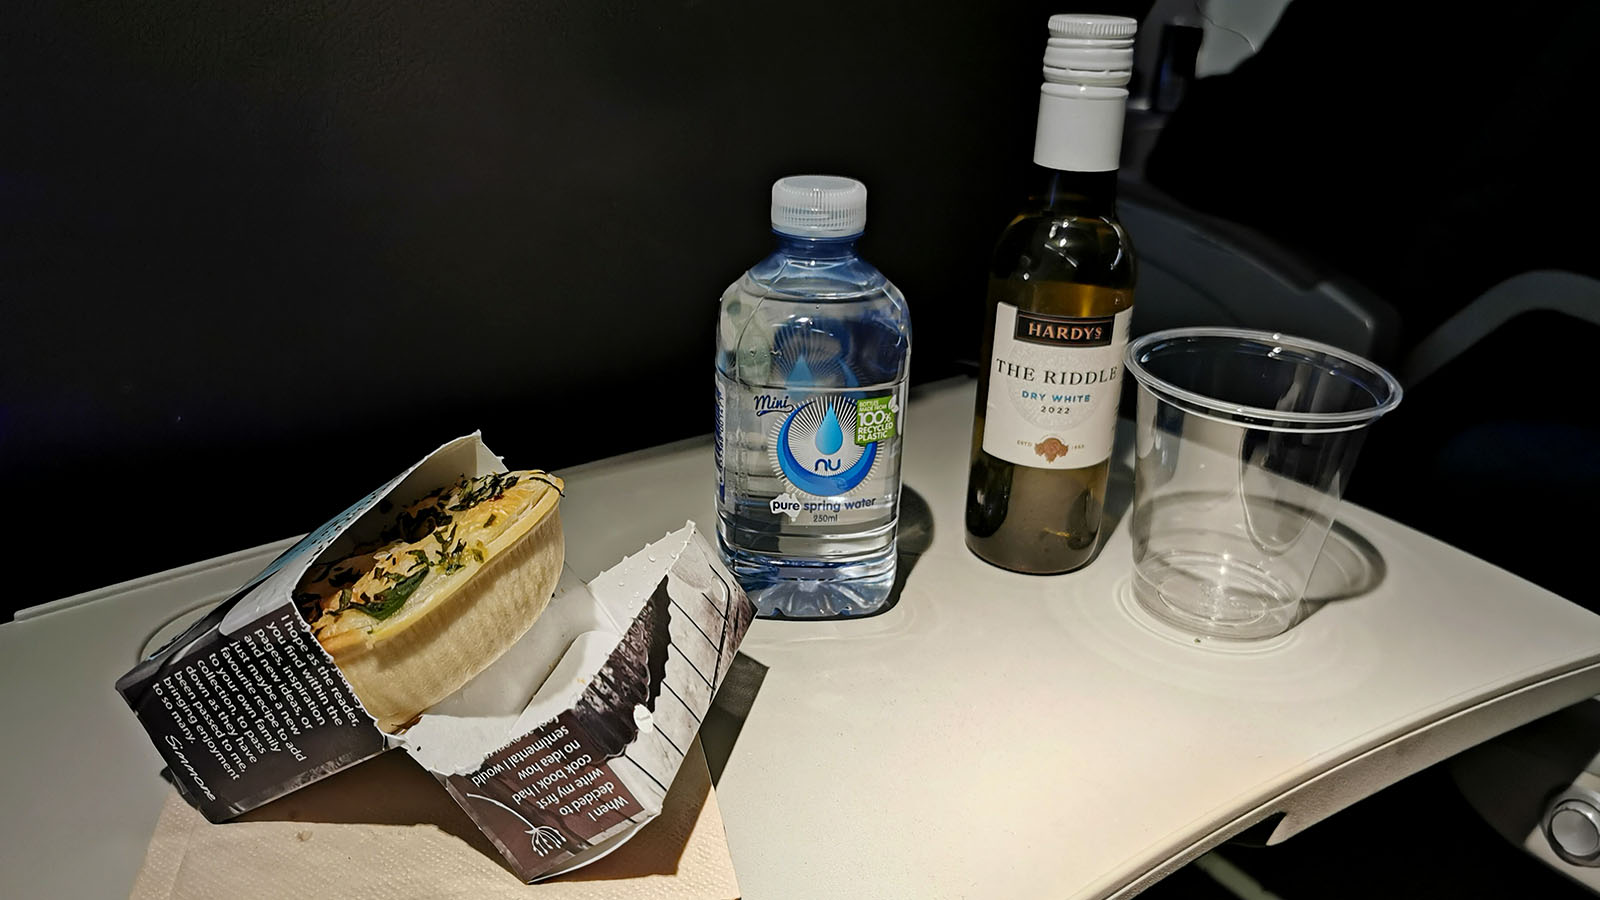 Inflight meal on the QantasLink Embraer E190